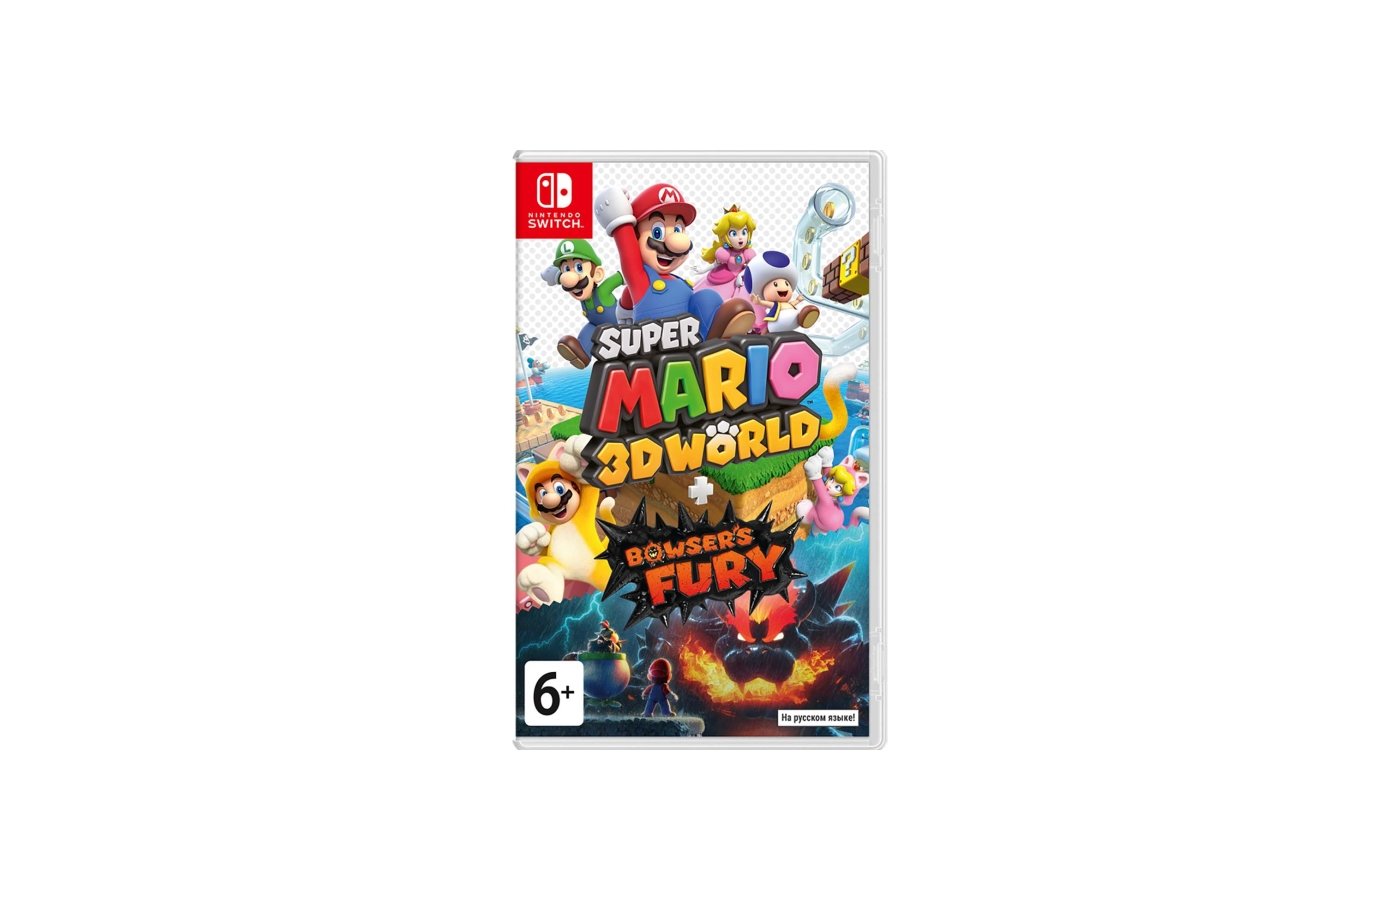 Super mario 3d world bowsers. Super Mario 3d World Bowser's Fury Nintendo Switch. Марио 3d World Nintendo Switch. Марио 3д ворлд на Нинтендо свитч. Super Mario 3d World + Bowser's Fury.